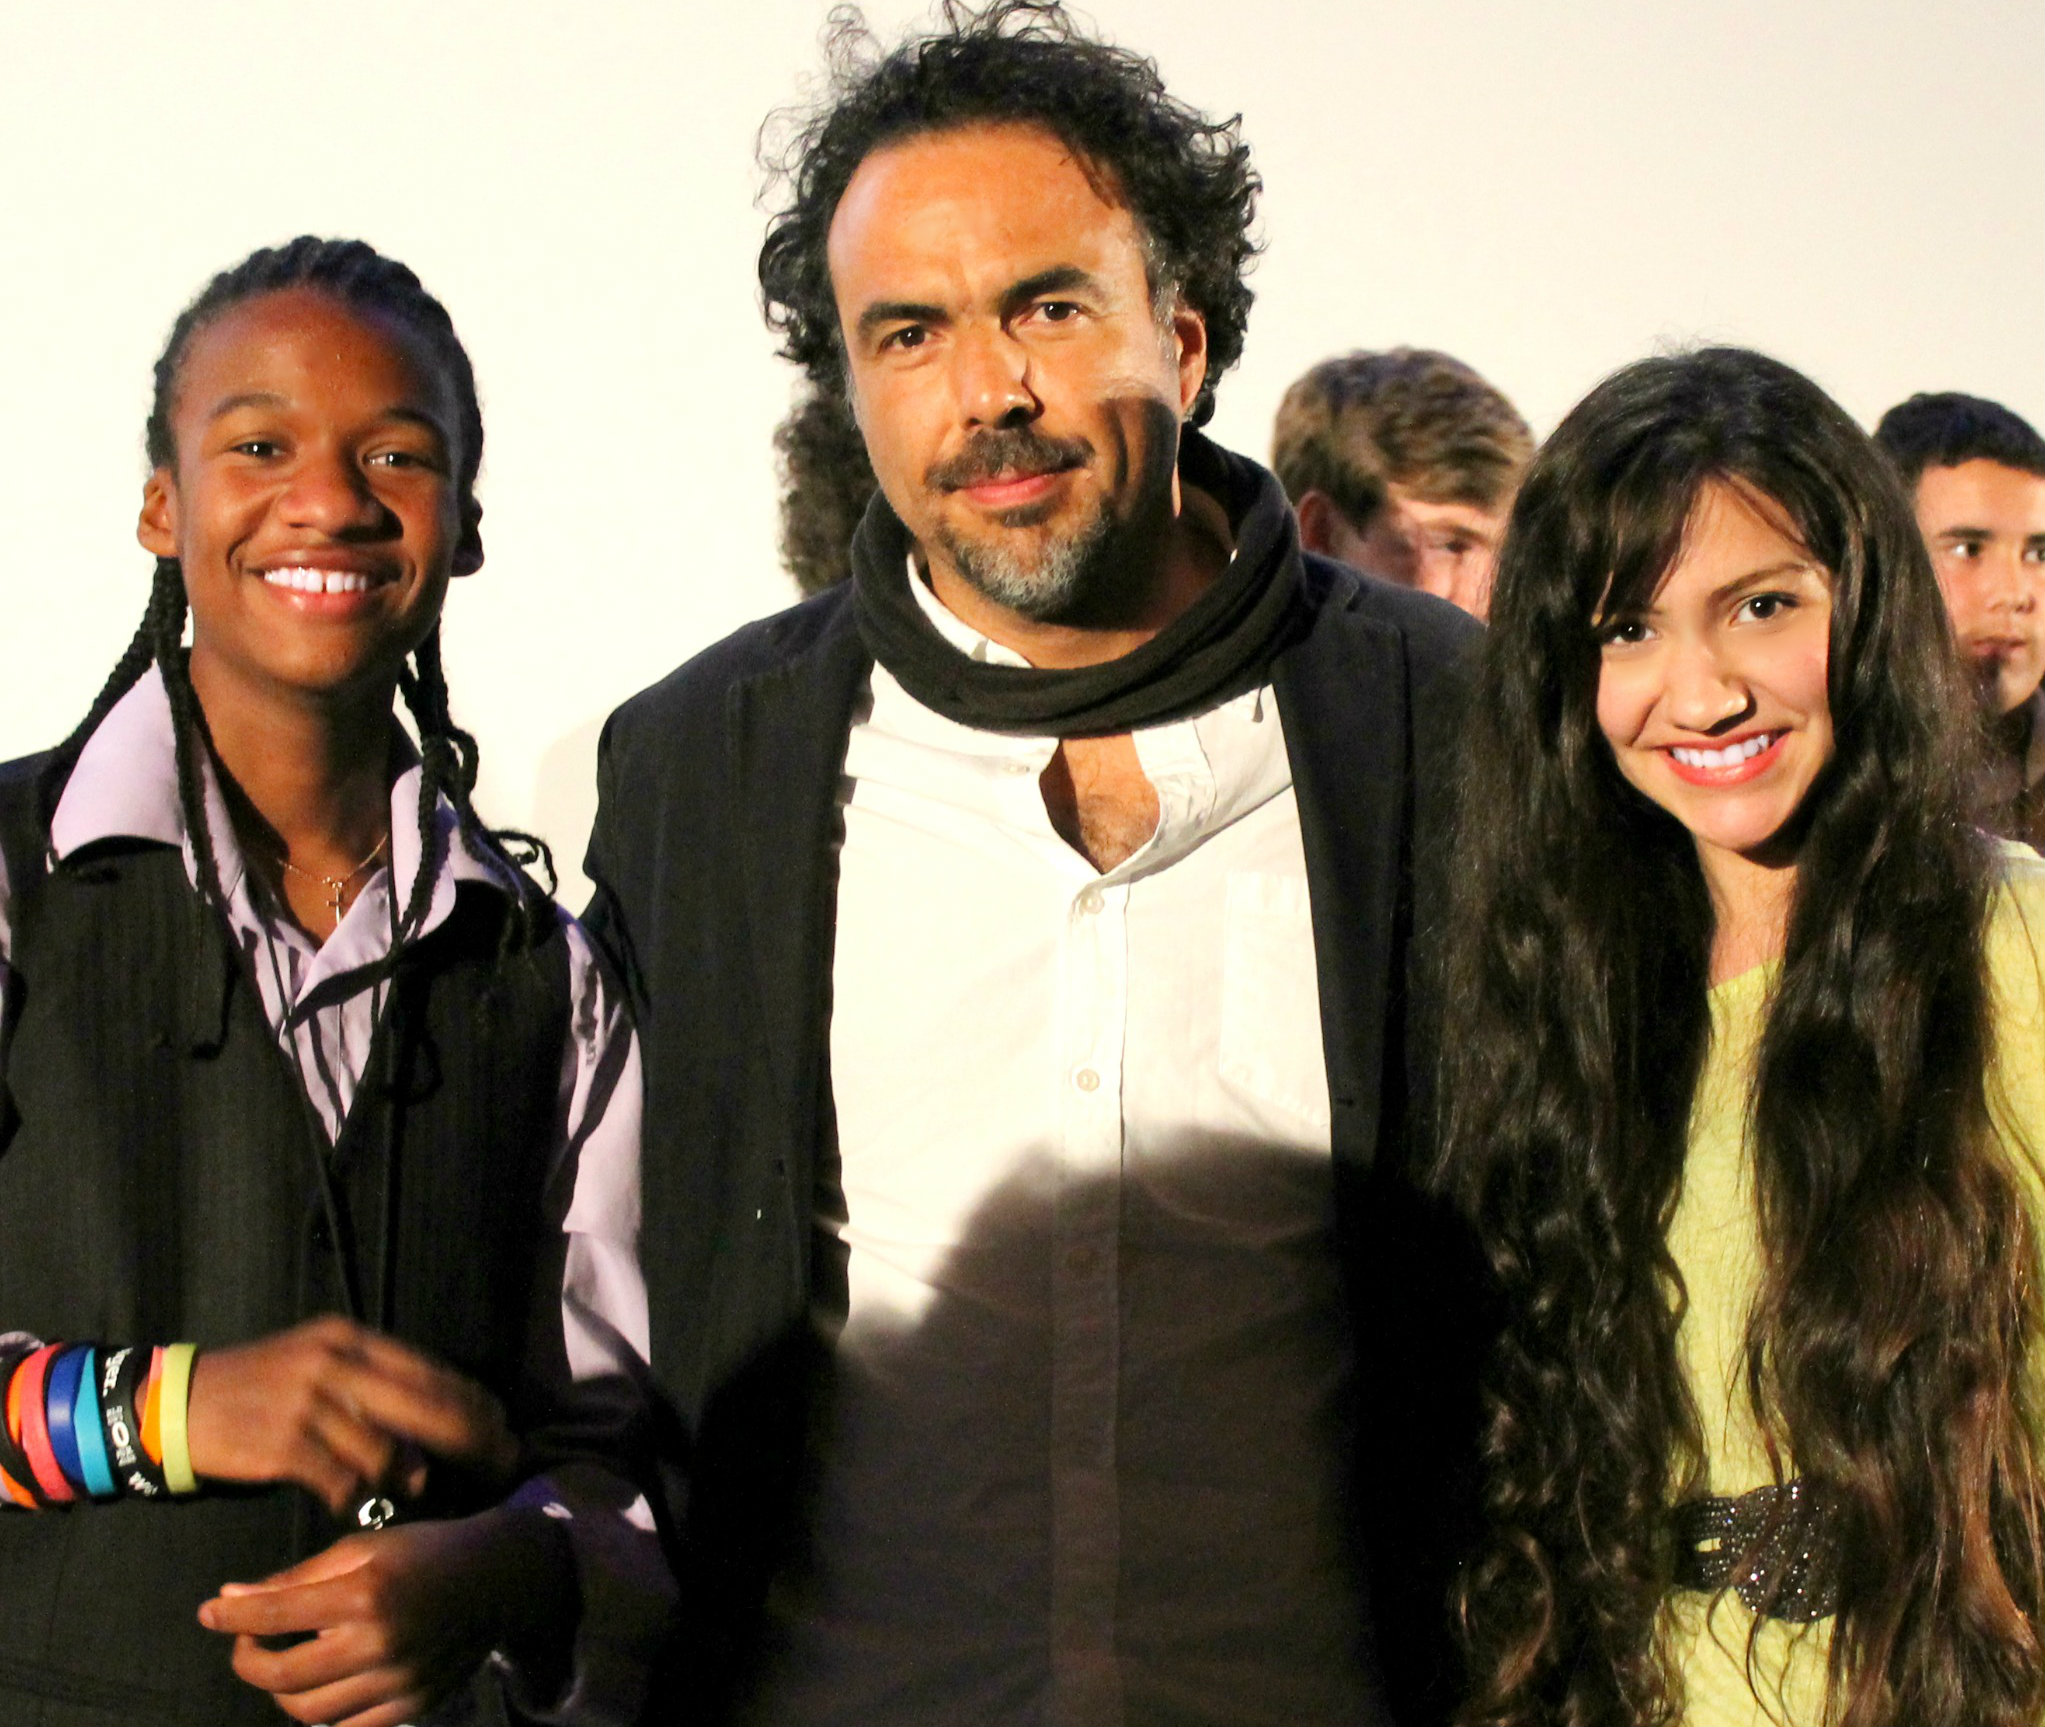 (2013) Trey Carlisle and Katie Scott with director Alejandro González Iñárritu (Babel, 21 Grams) at film festival